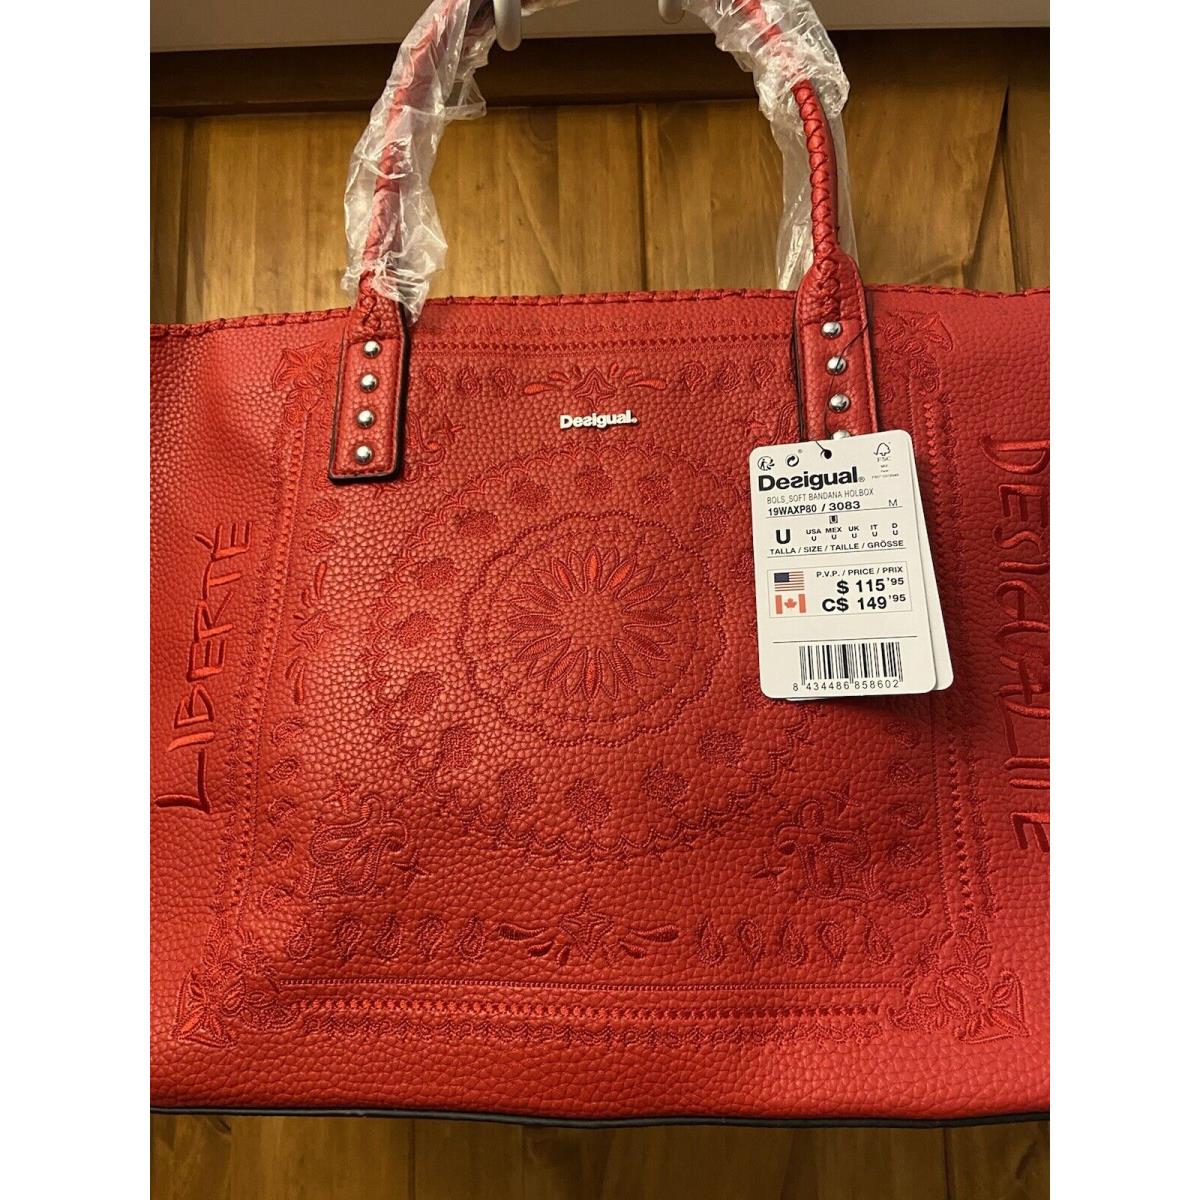 Desigual Purse Bag/ Tote Soft Bandana Design Red-embroidered Design